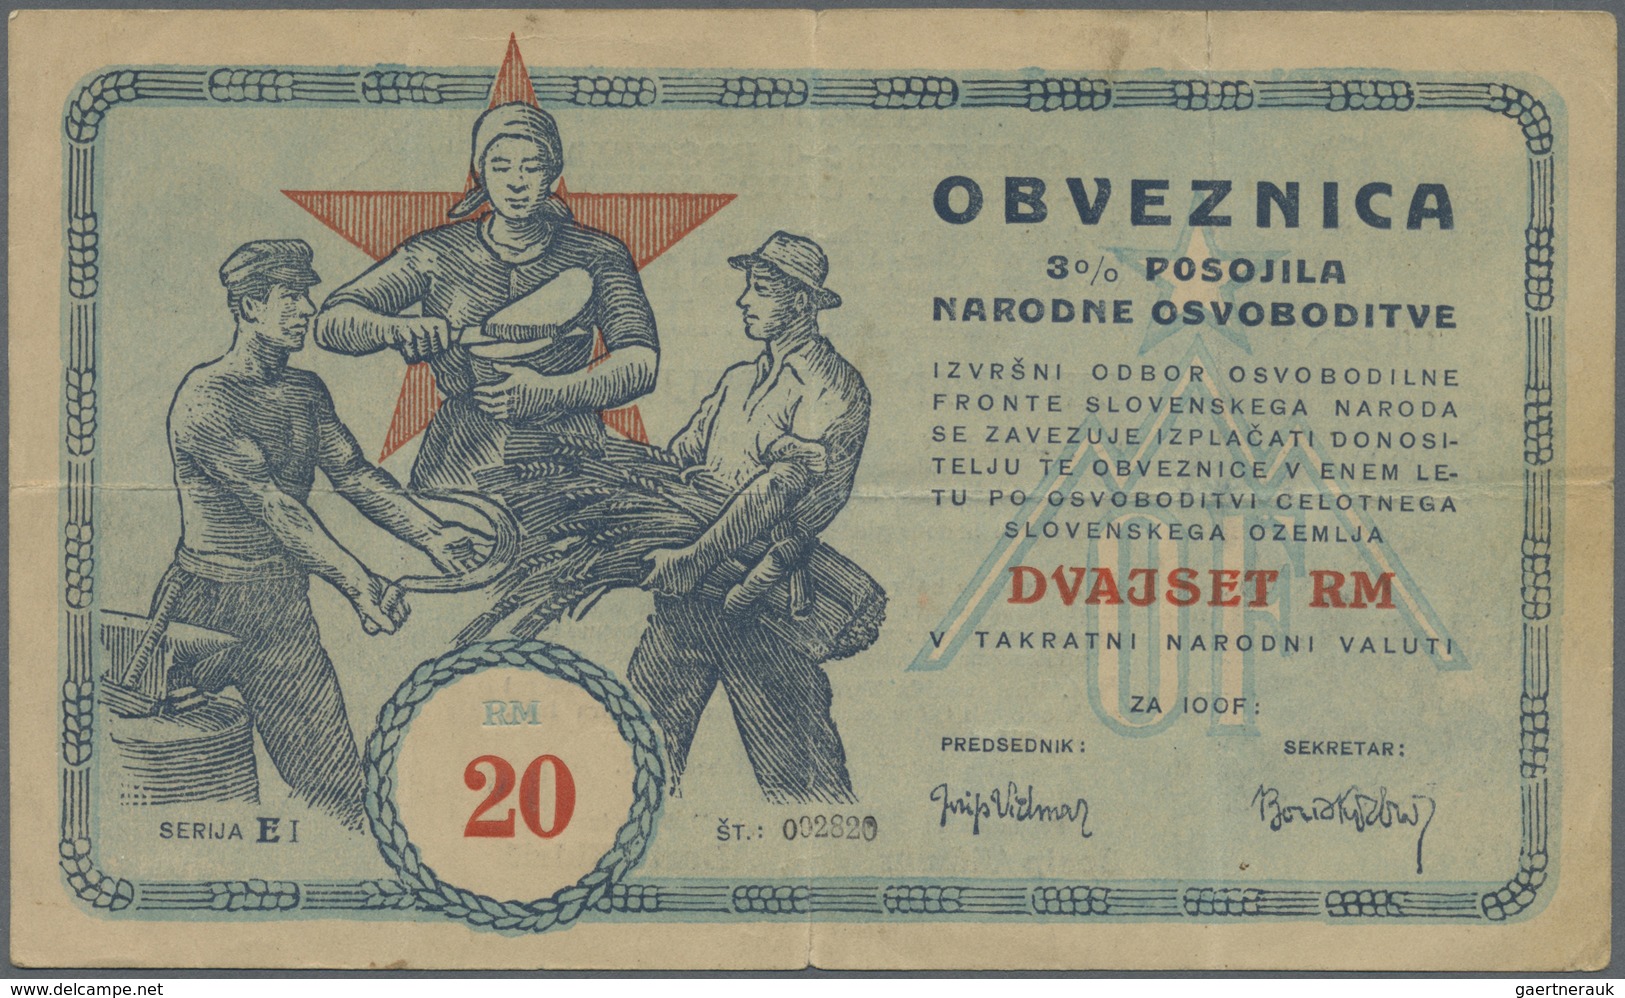 Yugoslavia / Jugoslavien: Committee Of The Slovenian Government Liberty Front 20 Reichsmark 1943, P. - Yugoslavia